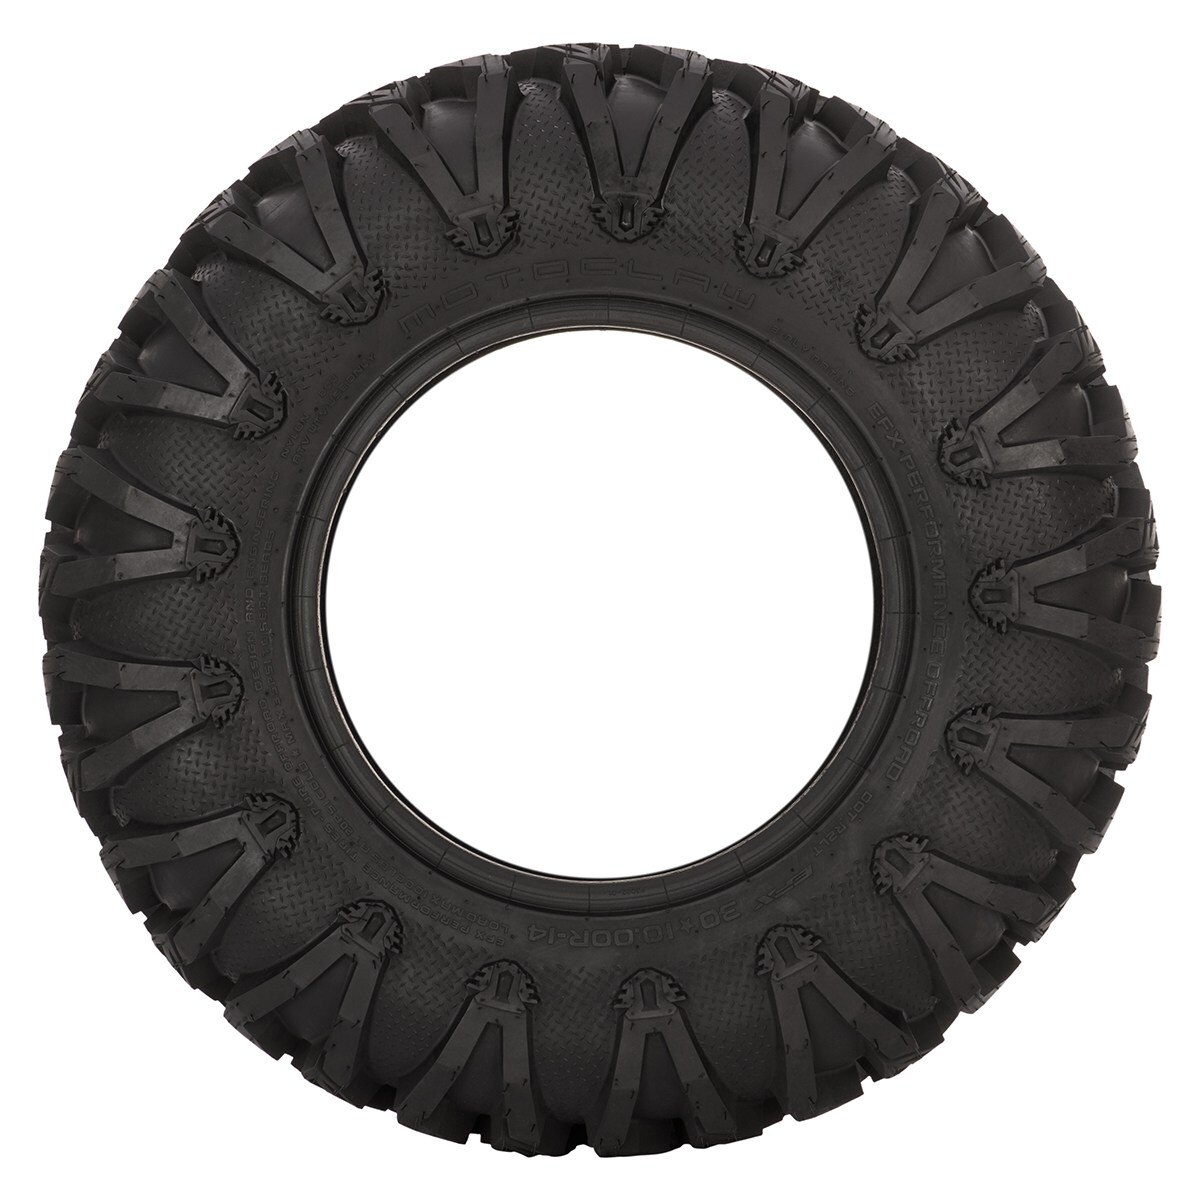 EFX® MotoClaw Tire